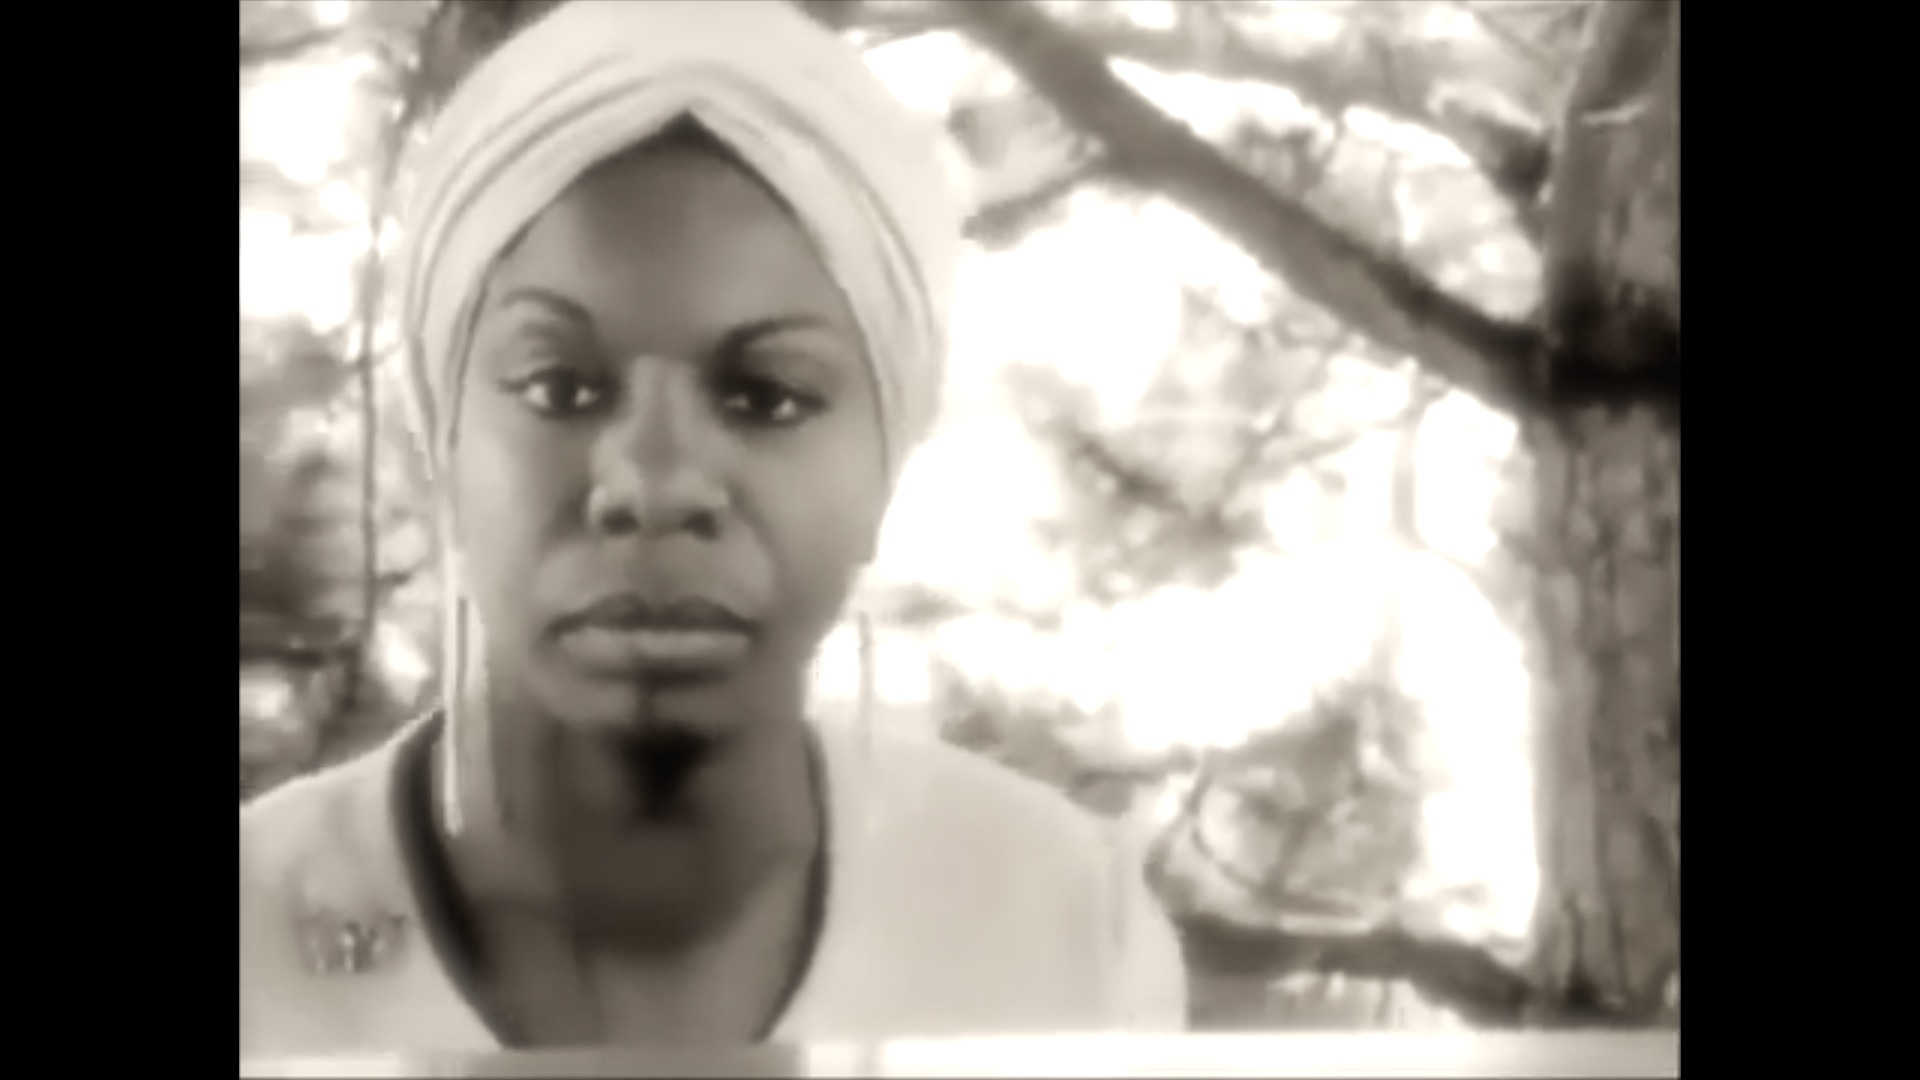 Nina Simone image